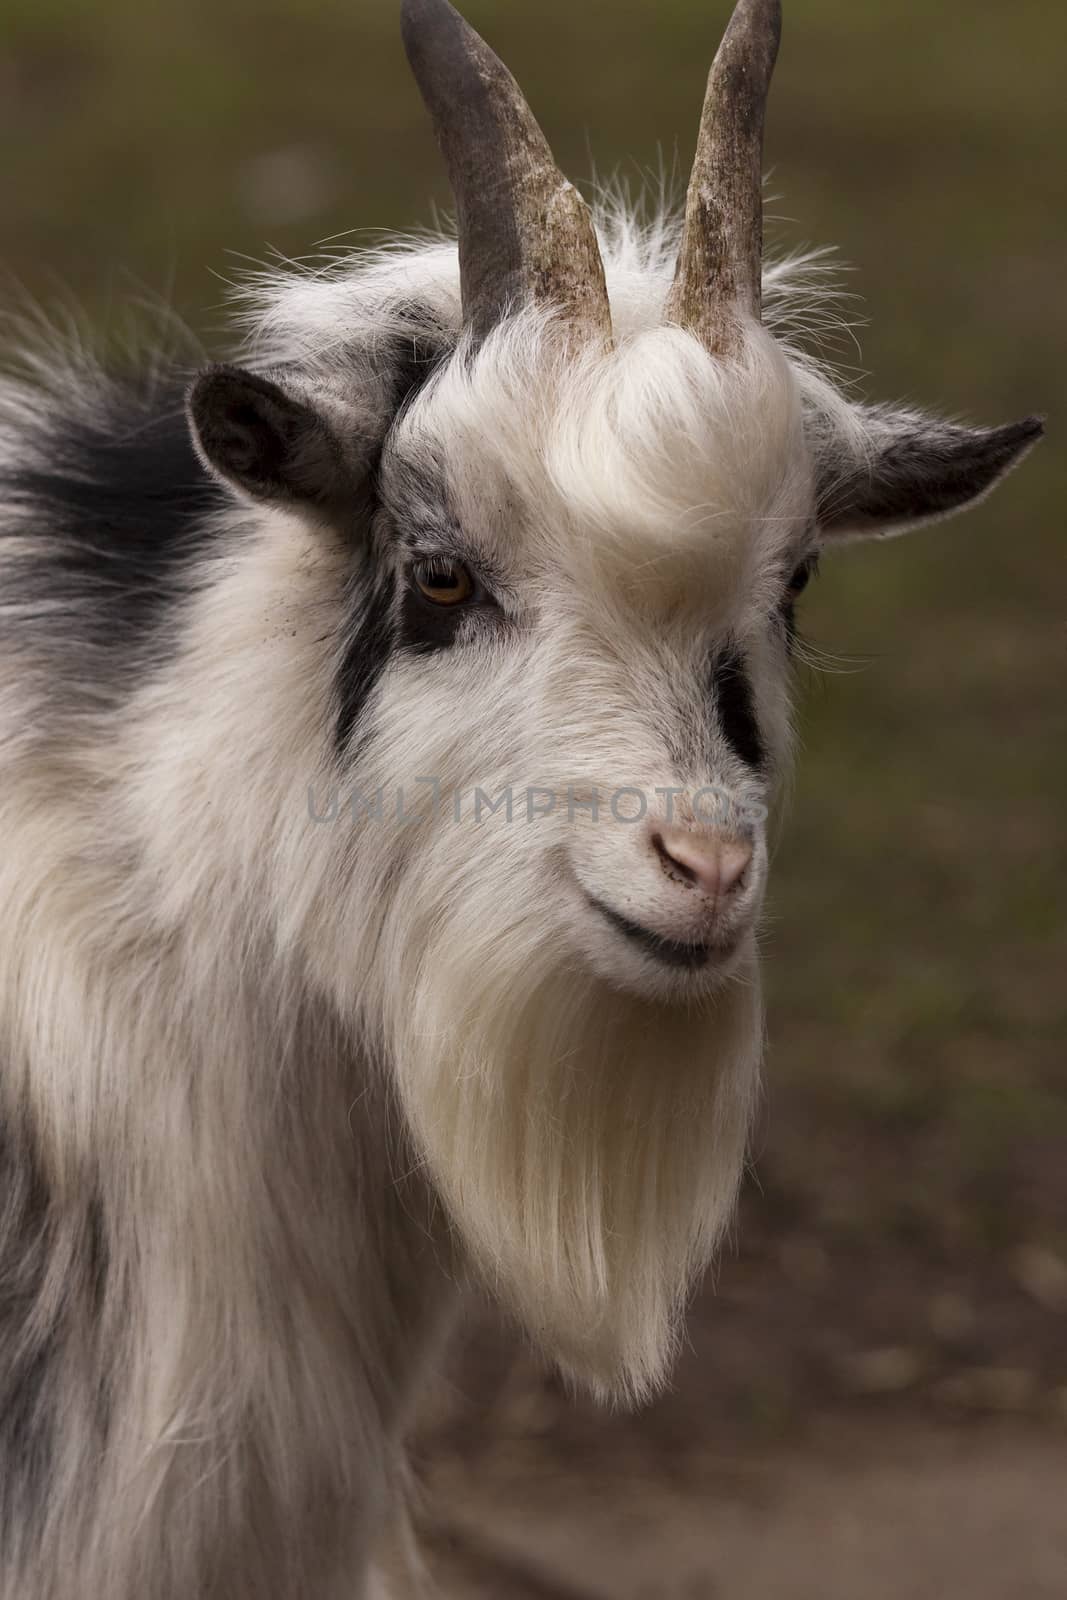 Pygmy Goat by ATGImages